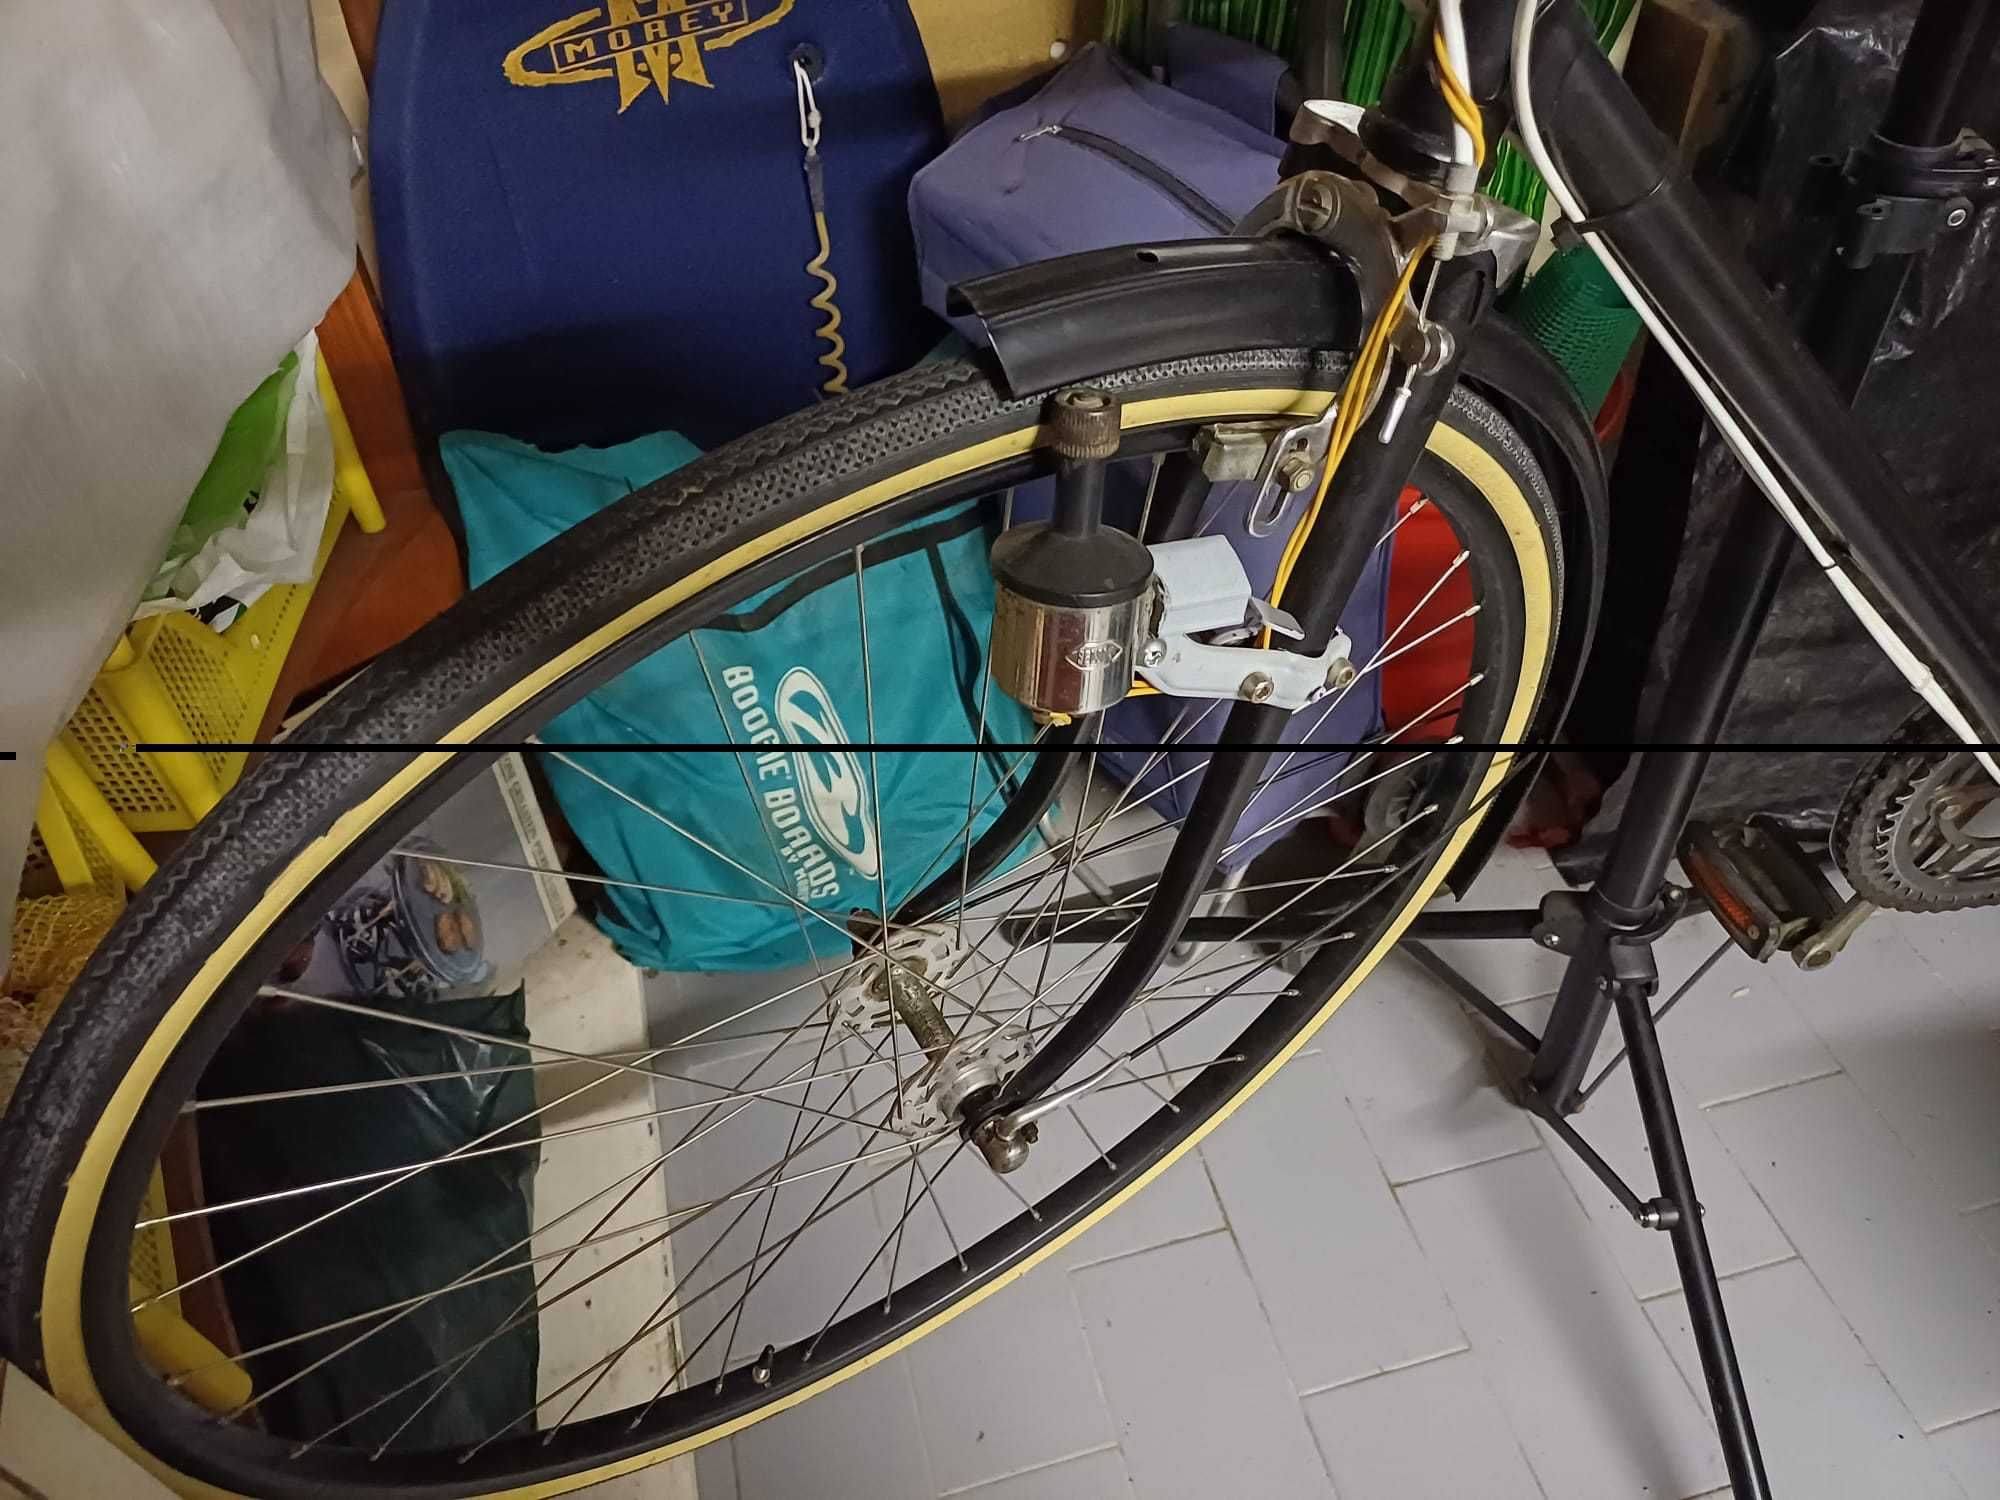 Bicicleta Pasteleira antiga semi restaurada